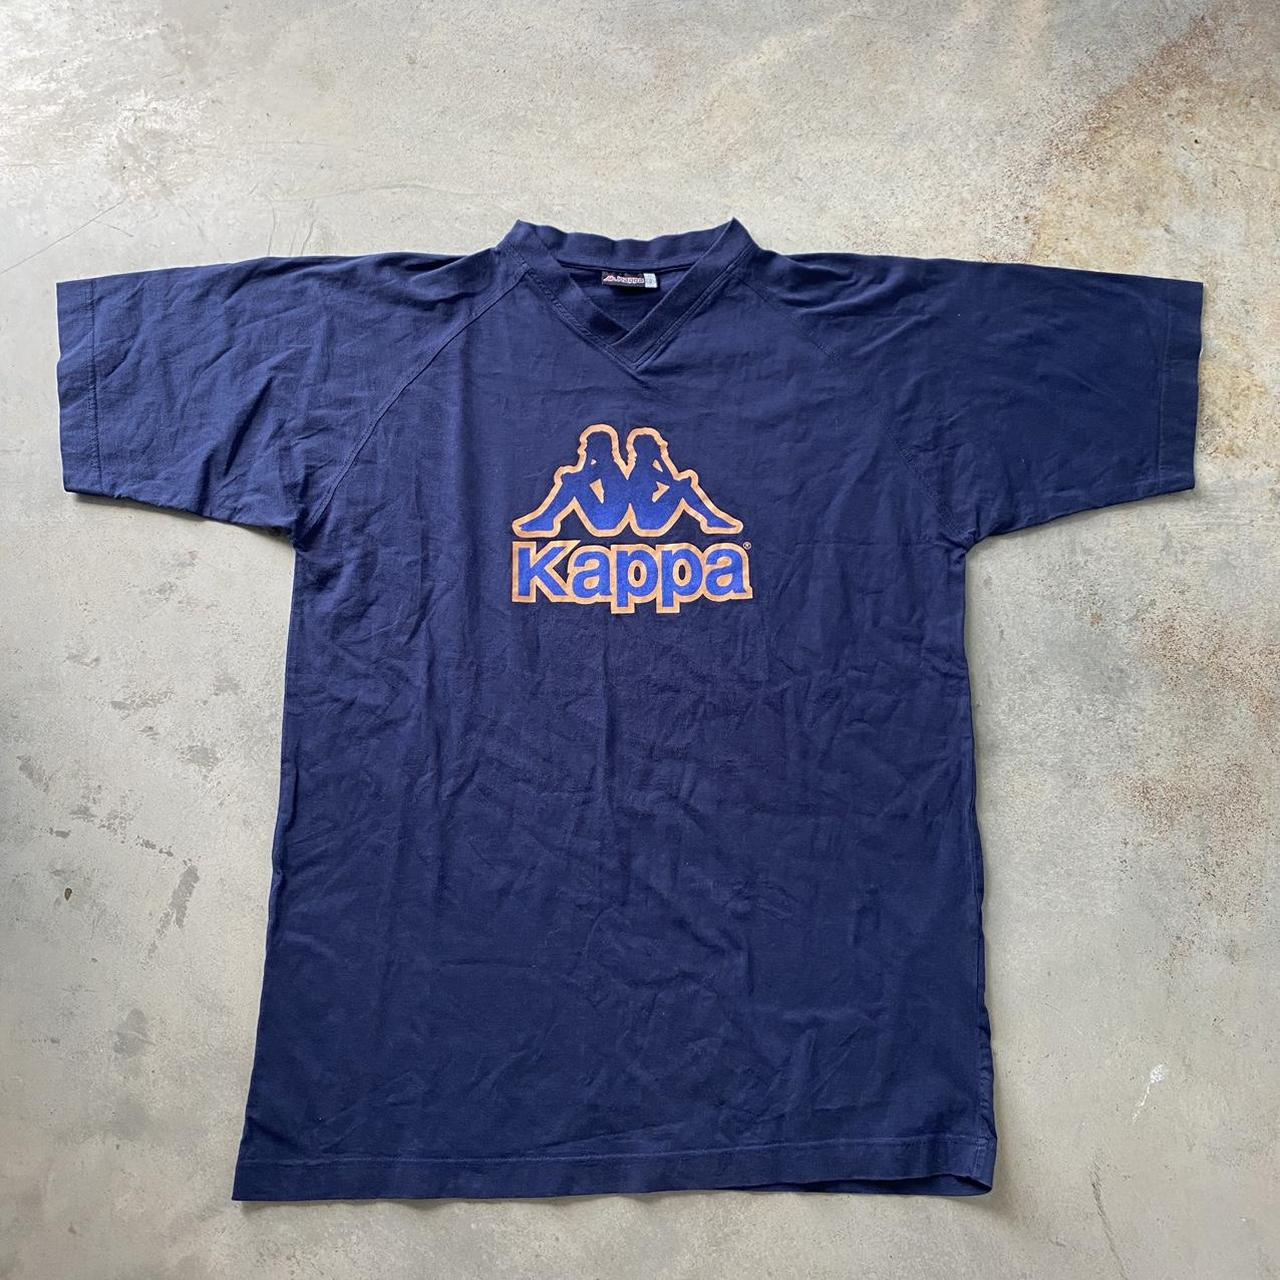 Vintage 90's Kappa Soccer Skater Blokecore - Depop